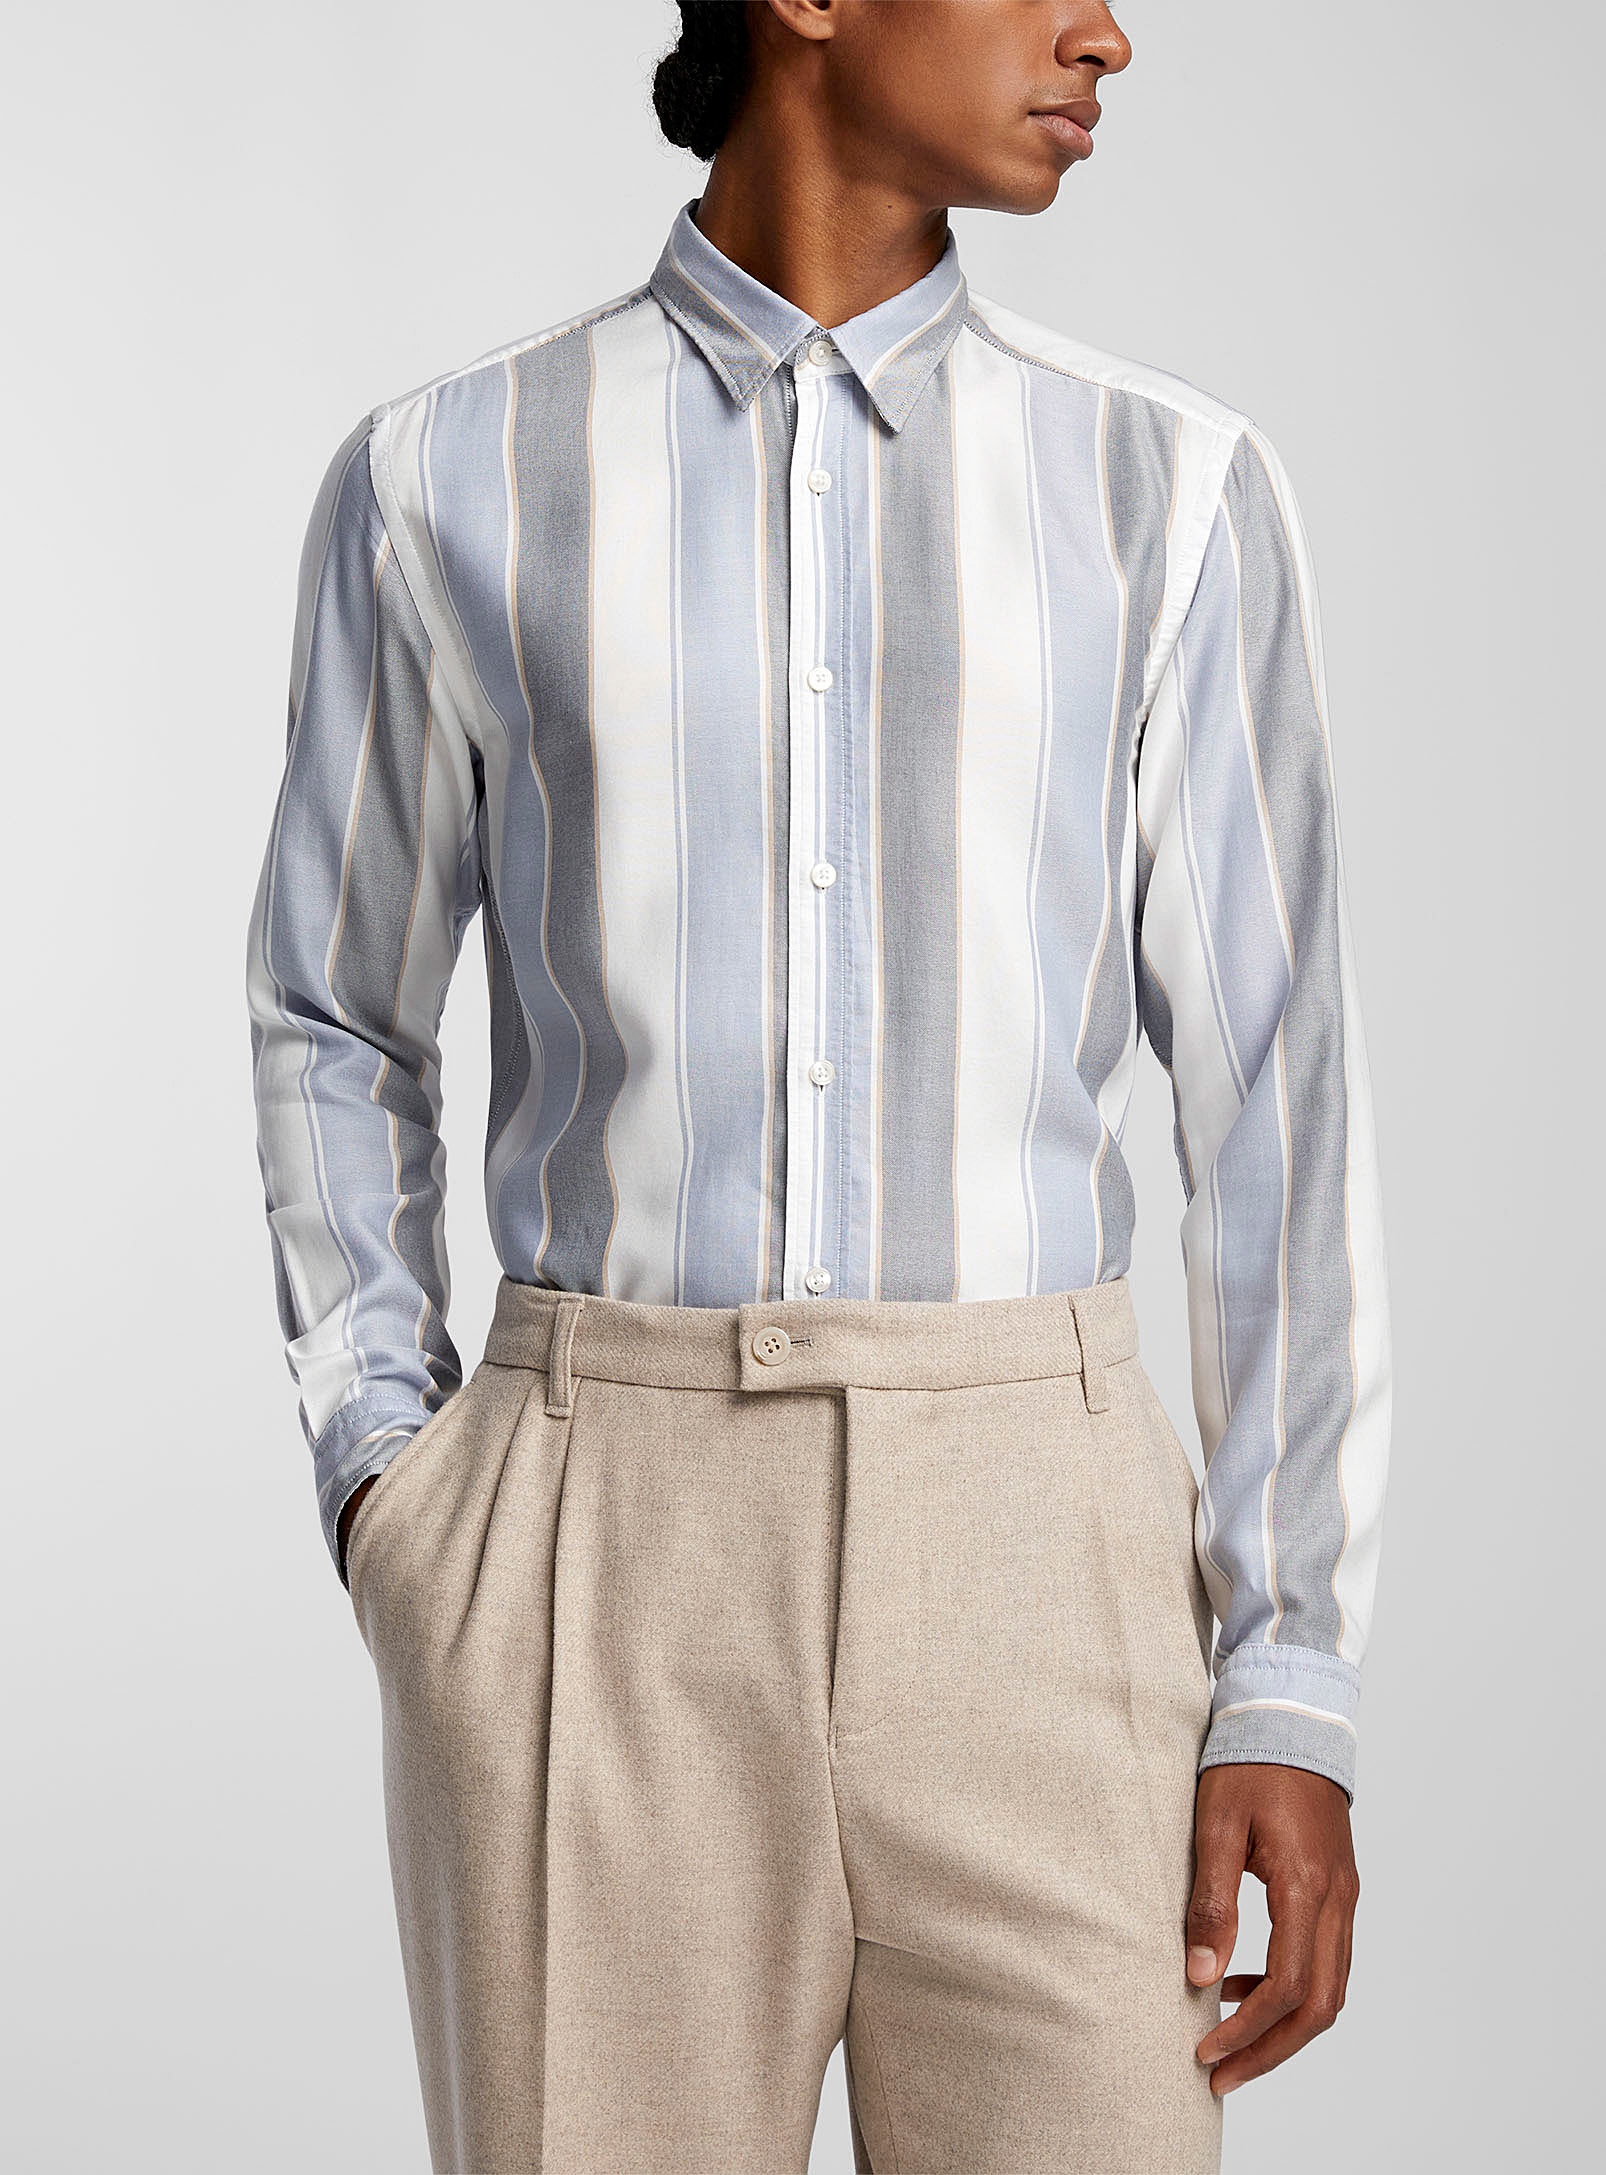 Hugo Boss Vertical Stripes Flowy Shirt In Patterned Blue